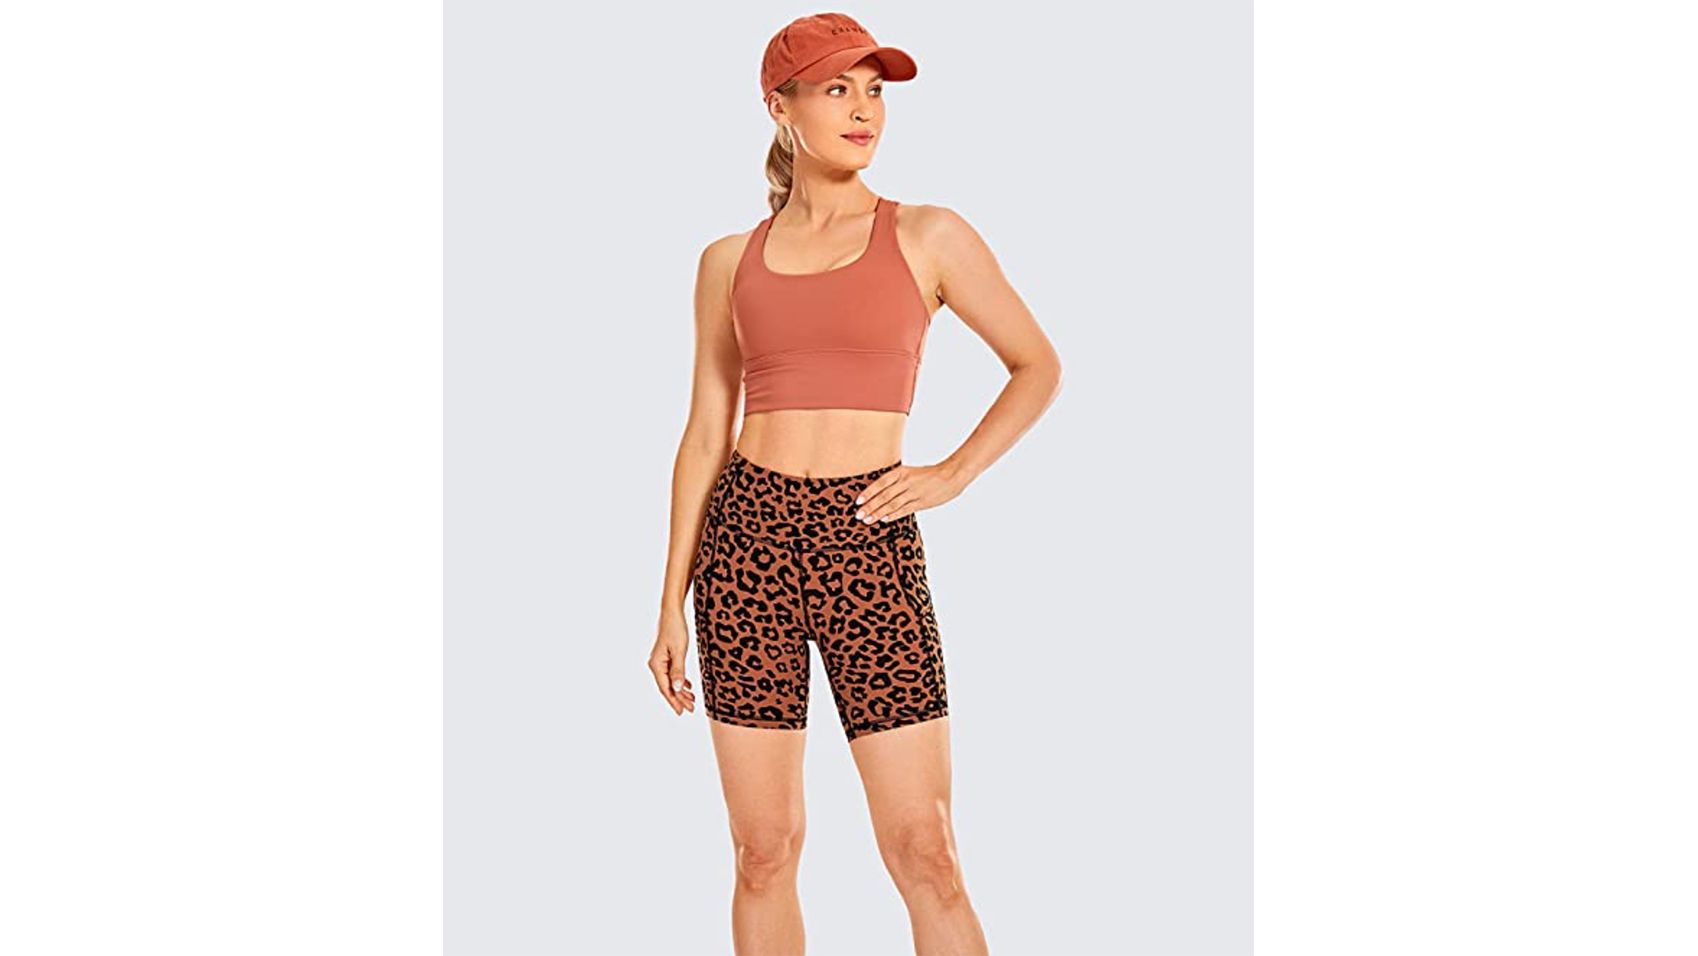  BALEAF Biker Shorts Women Yoga Gym Workout Spandex Running  Volleyball Tummy Control Compression Shorts with Pockets Soft 5 Black XXXL  : Clothing, Shoes & Jewelry